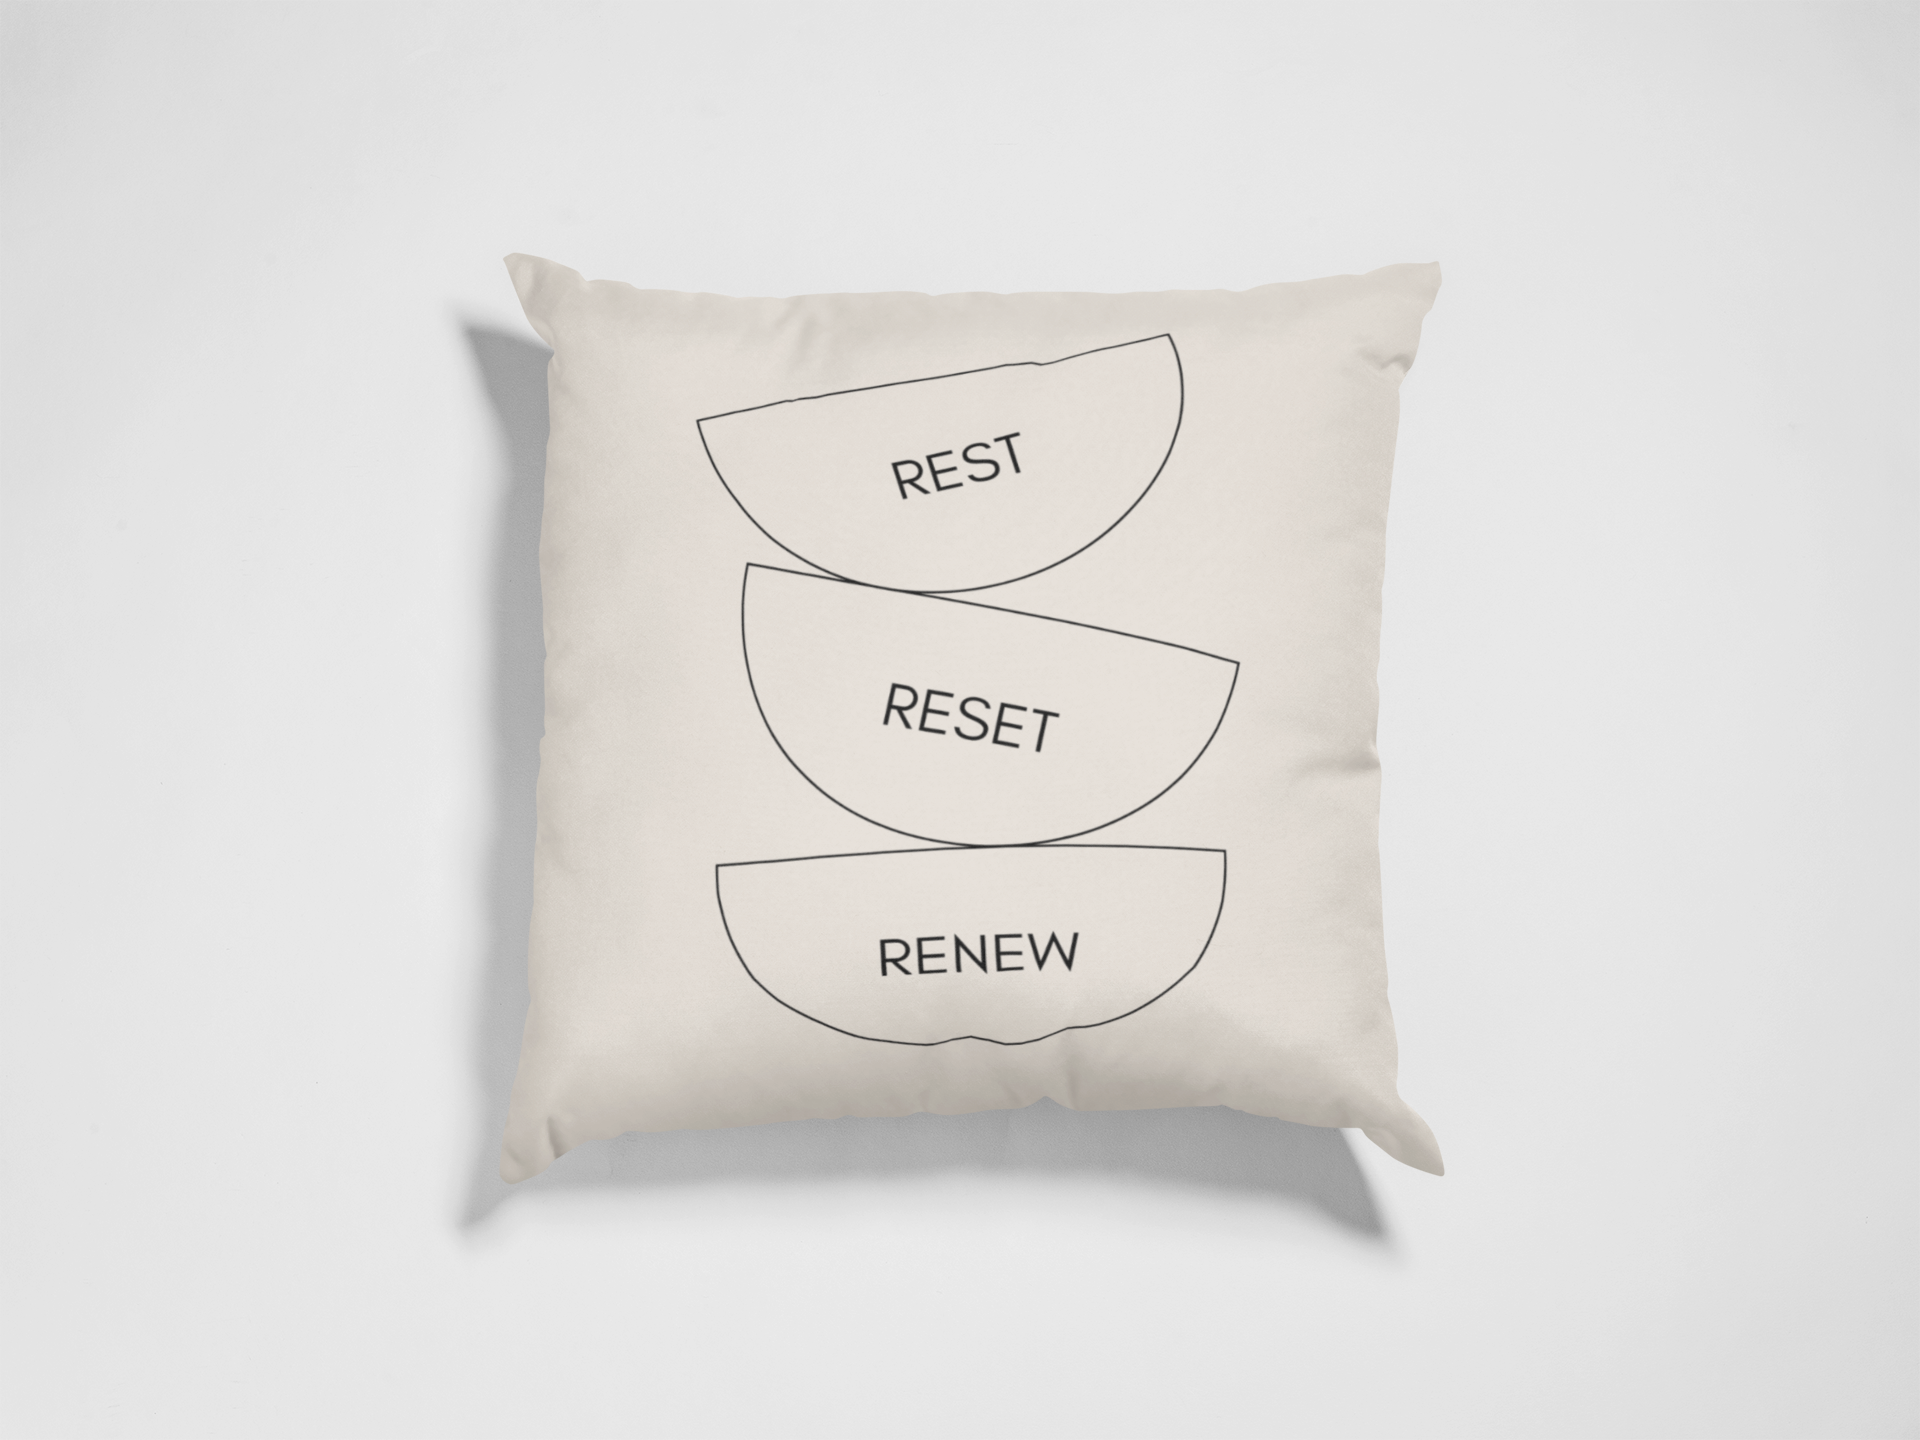 Rest, Reset, Renew Cushion